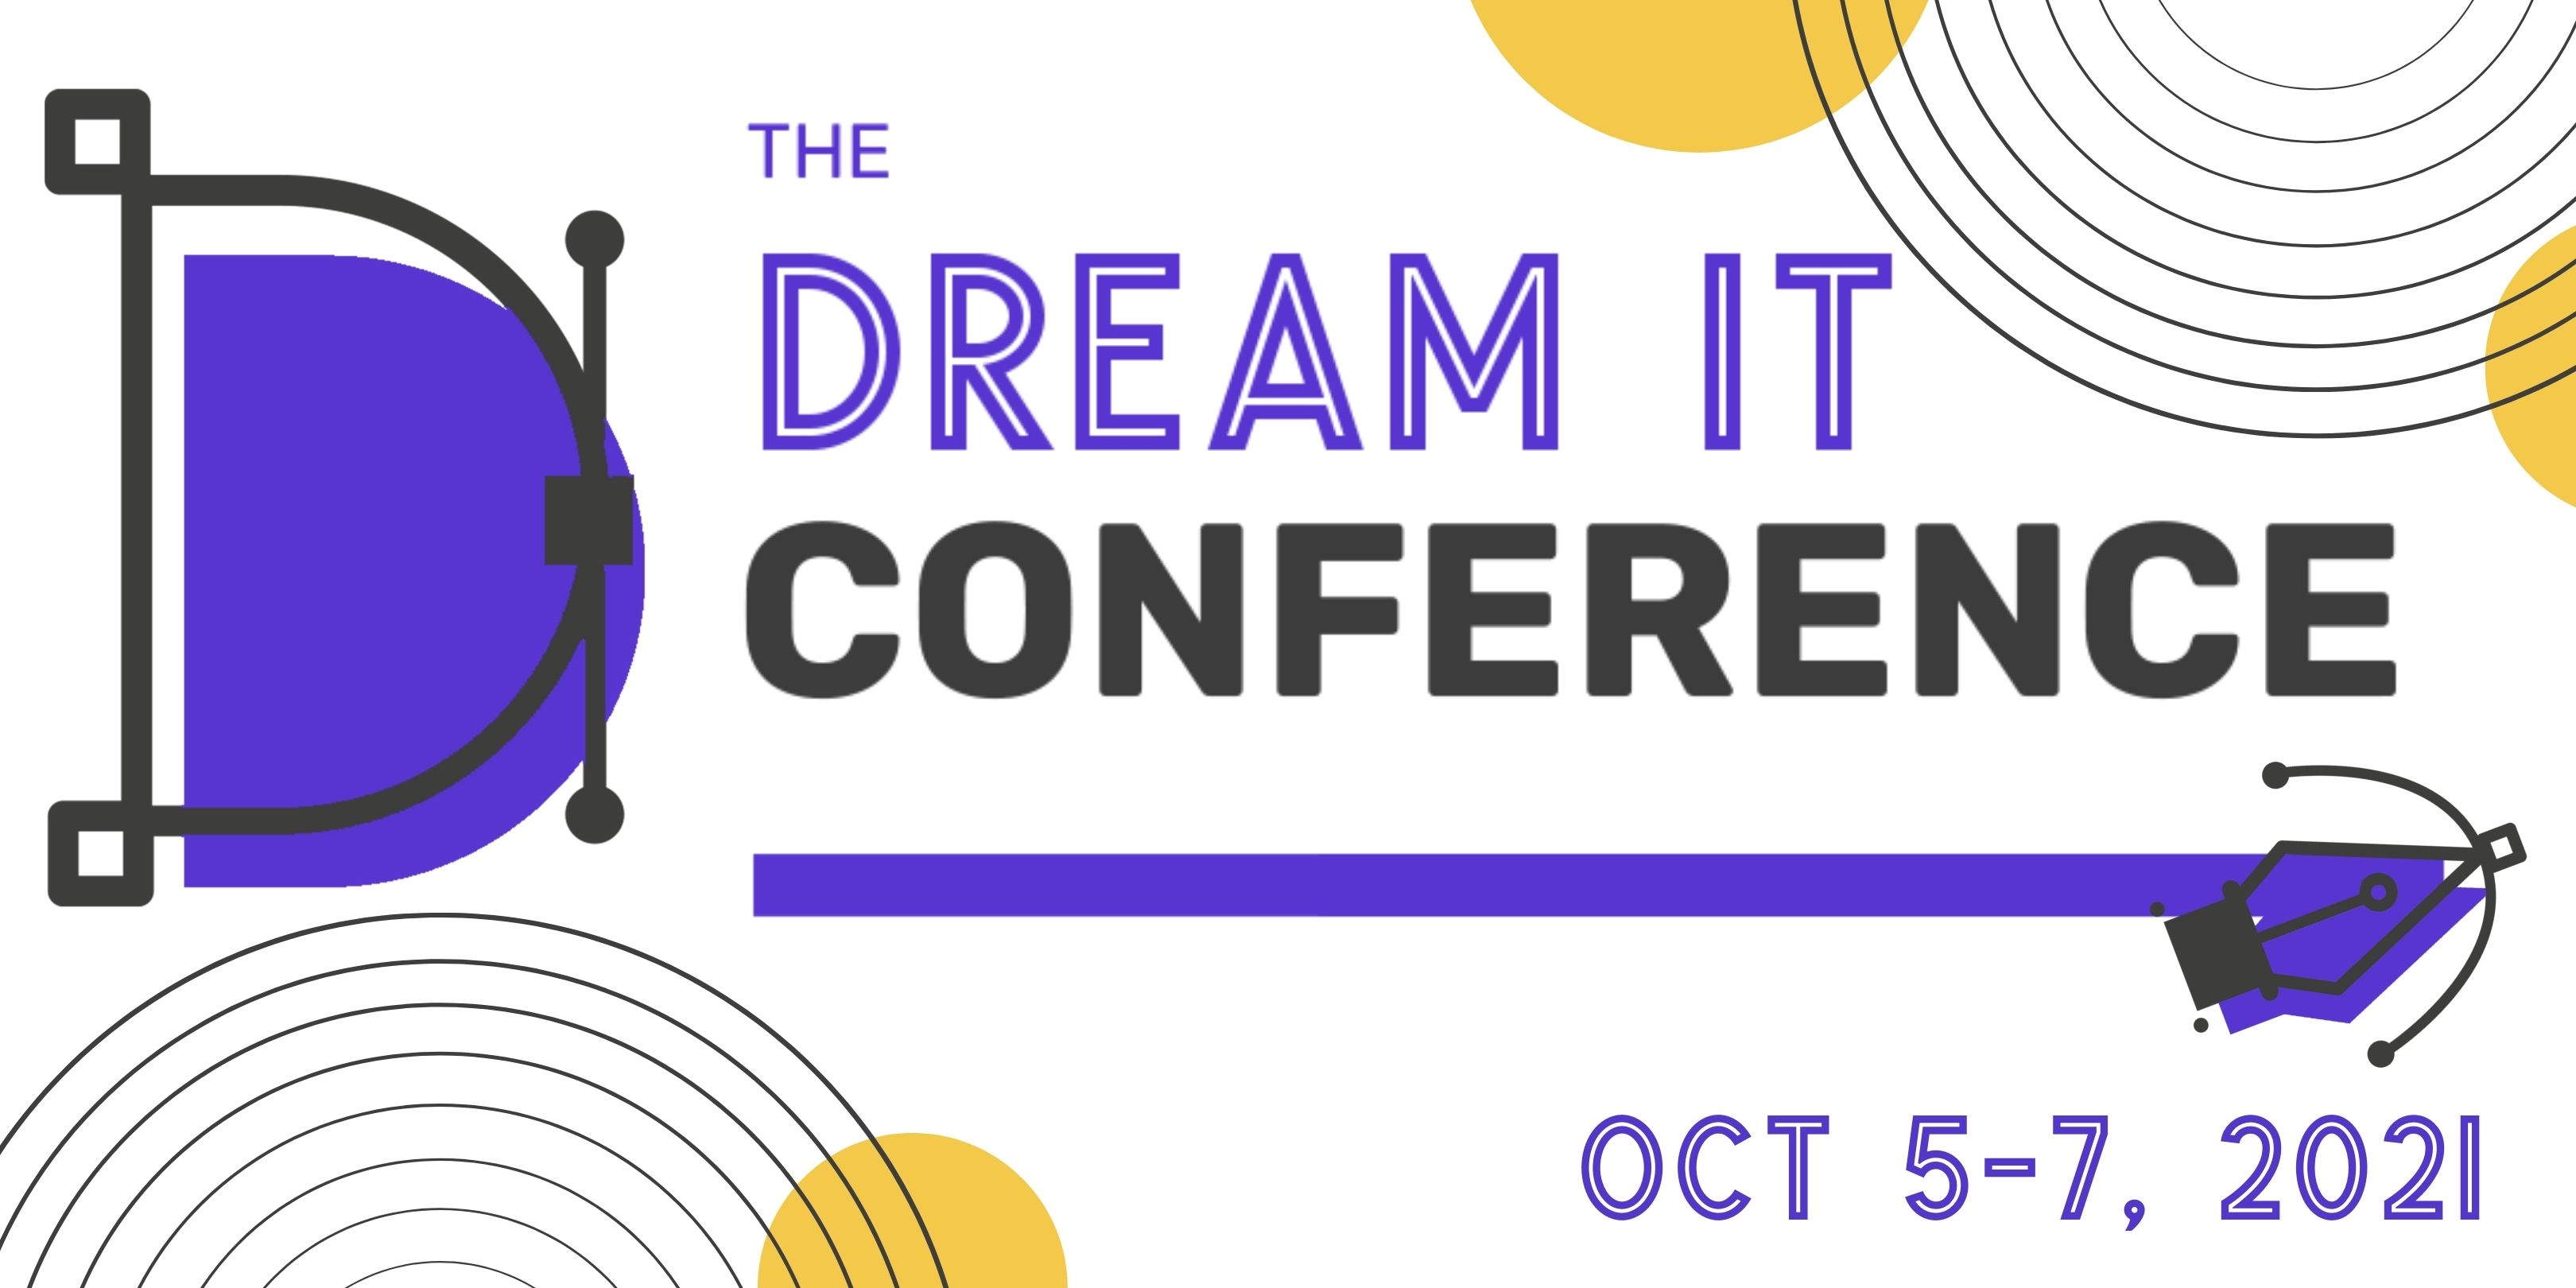 Dream It Conference Eventbrite Banner